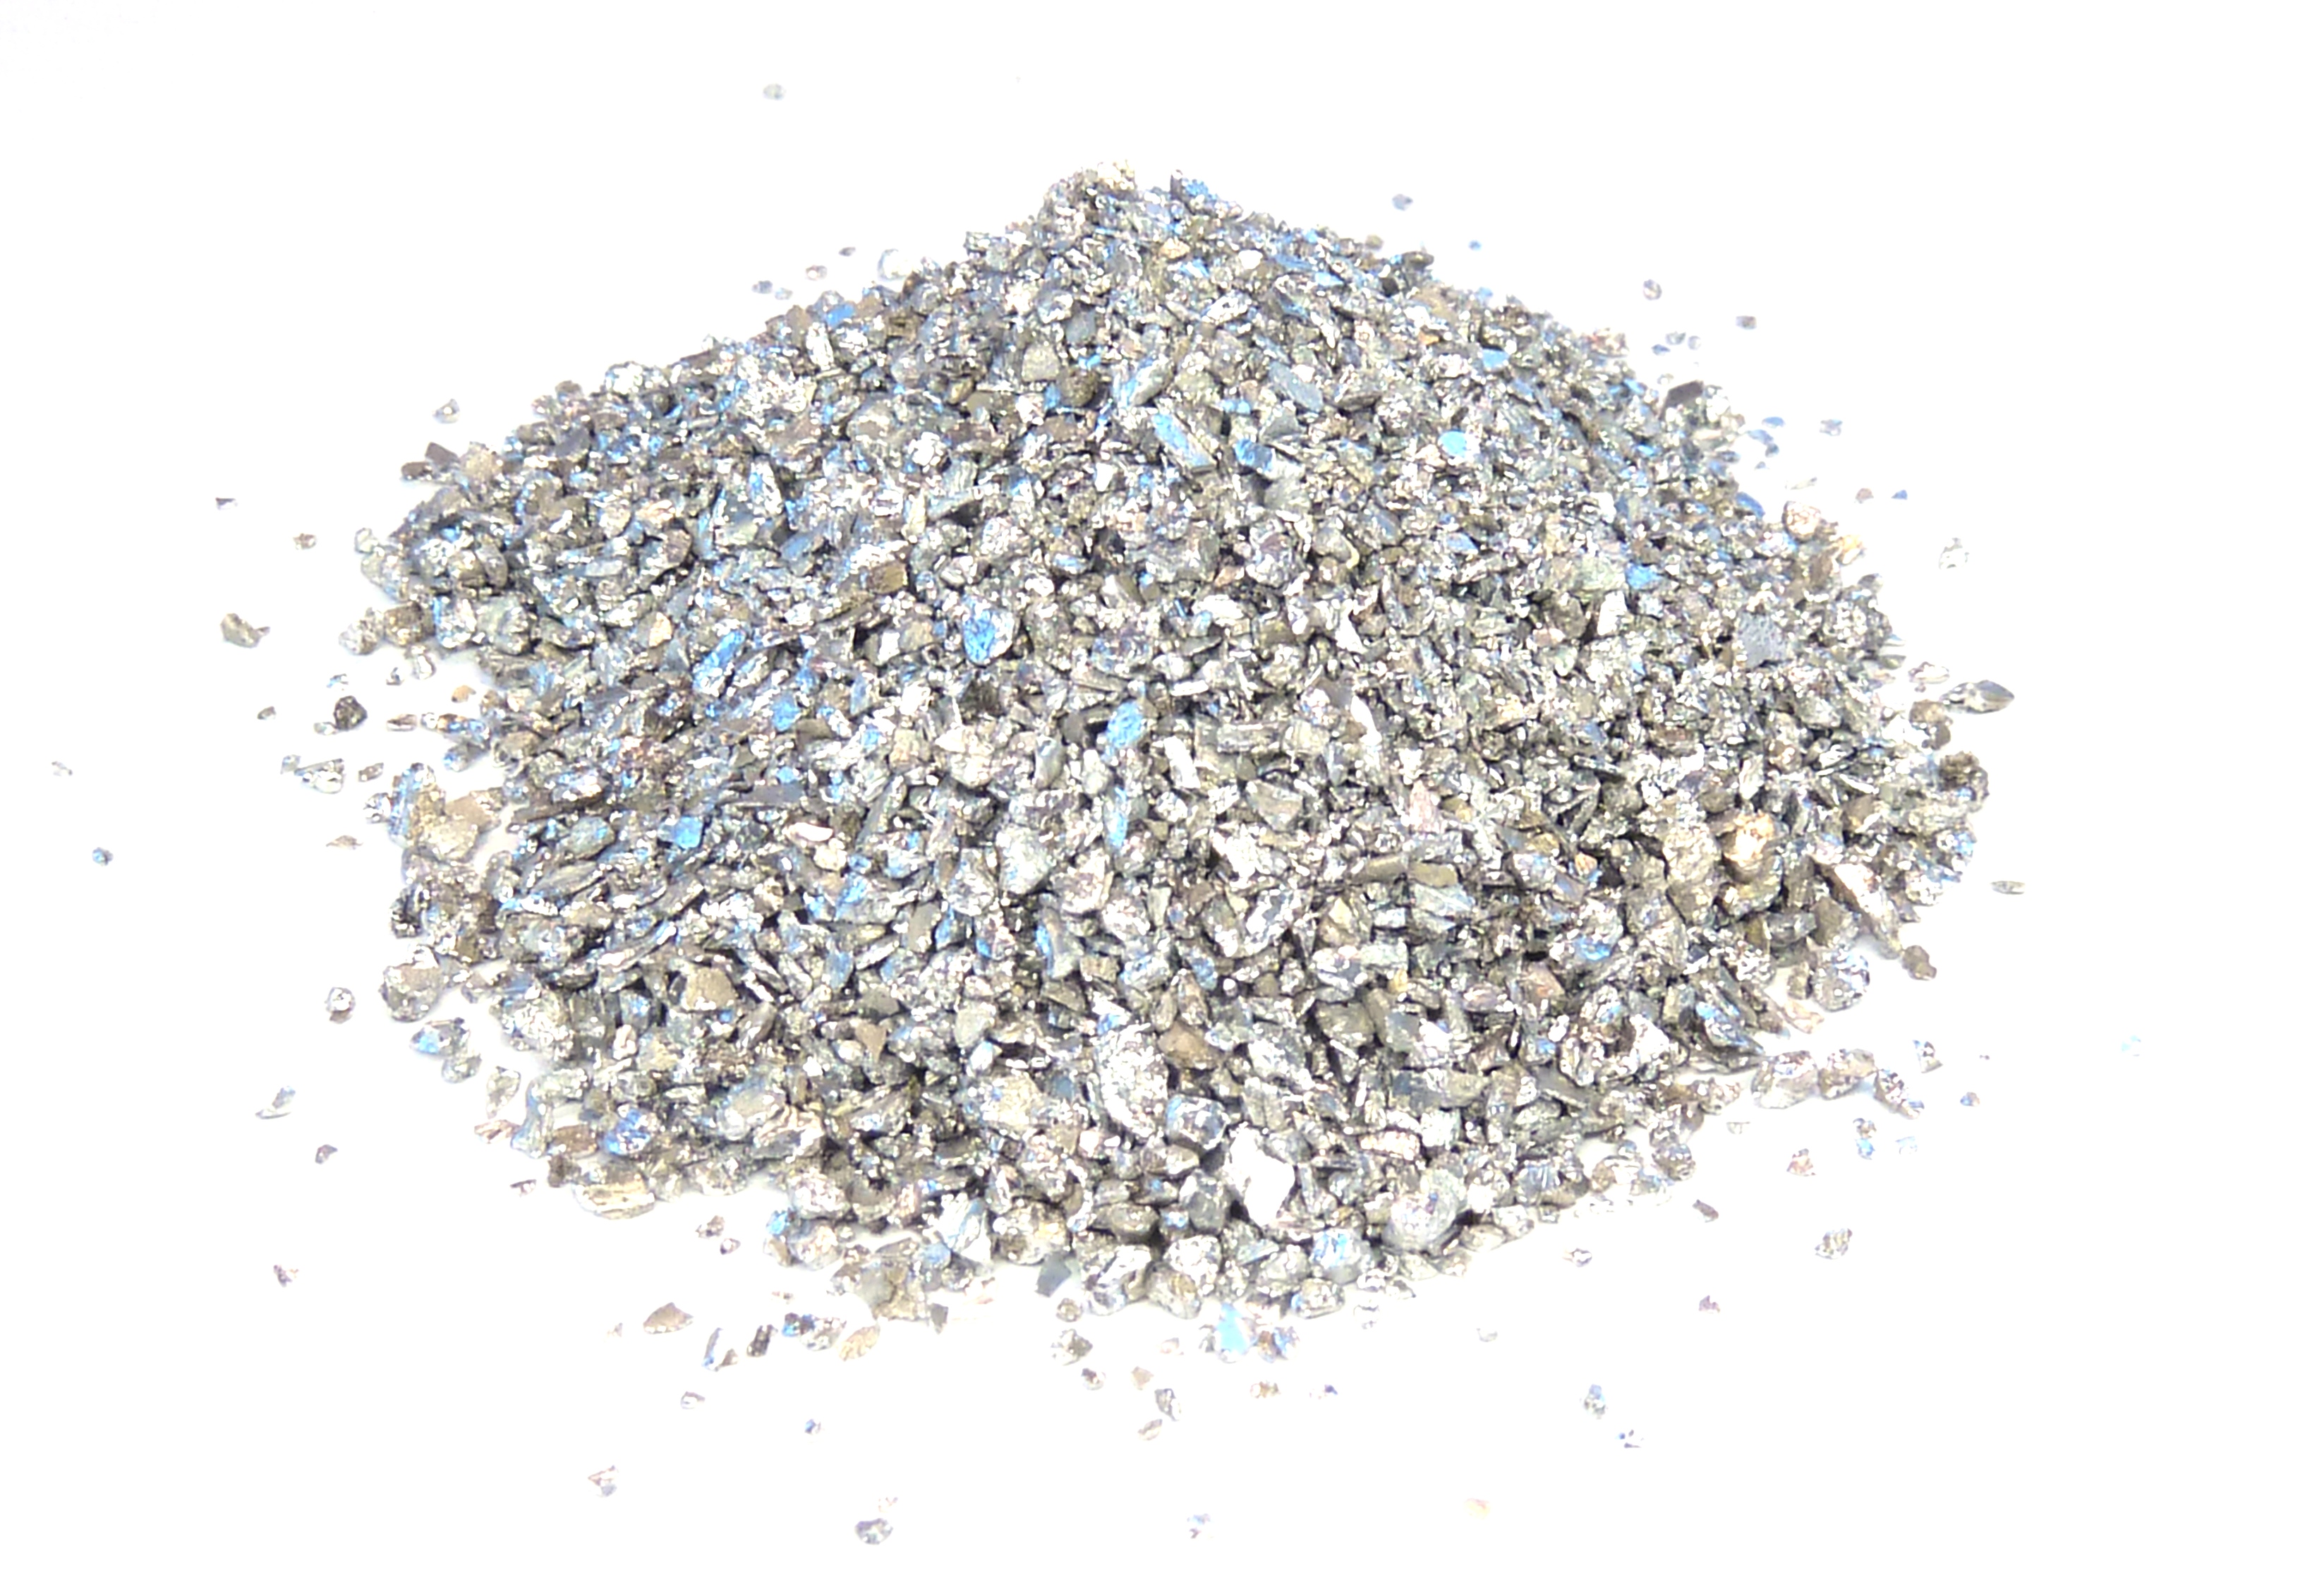 400-1500µm Magnaliumgranulat, MgAl, 50/50, Pulver - Legierung aus Magnesium und Aluminium, Aluminium/Magnesium alloy powder